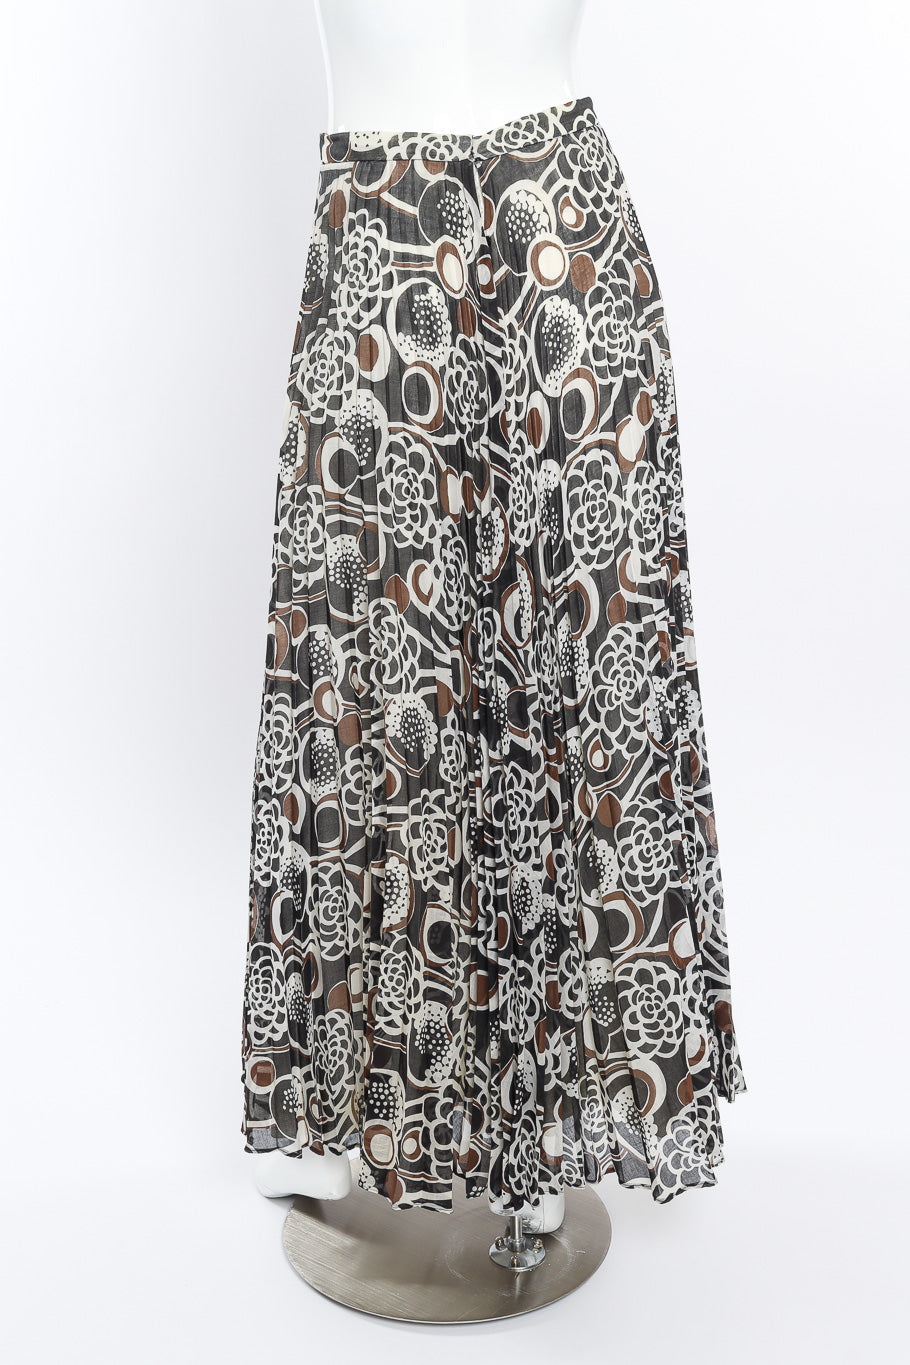 Vintage Nelly de Grab Abstract Dot Print Blouse & Skirt Set back view of skirt on mannequin @Recessla